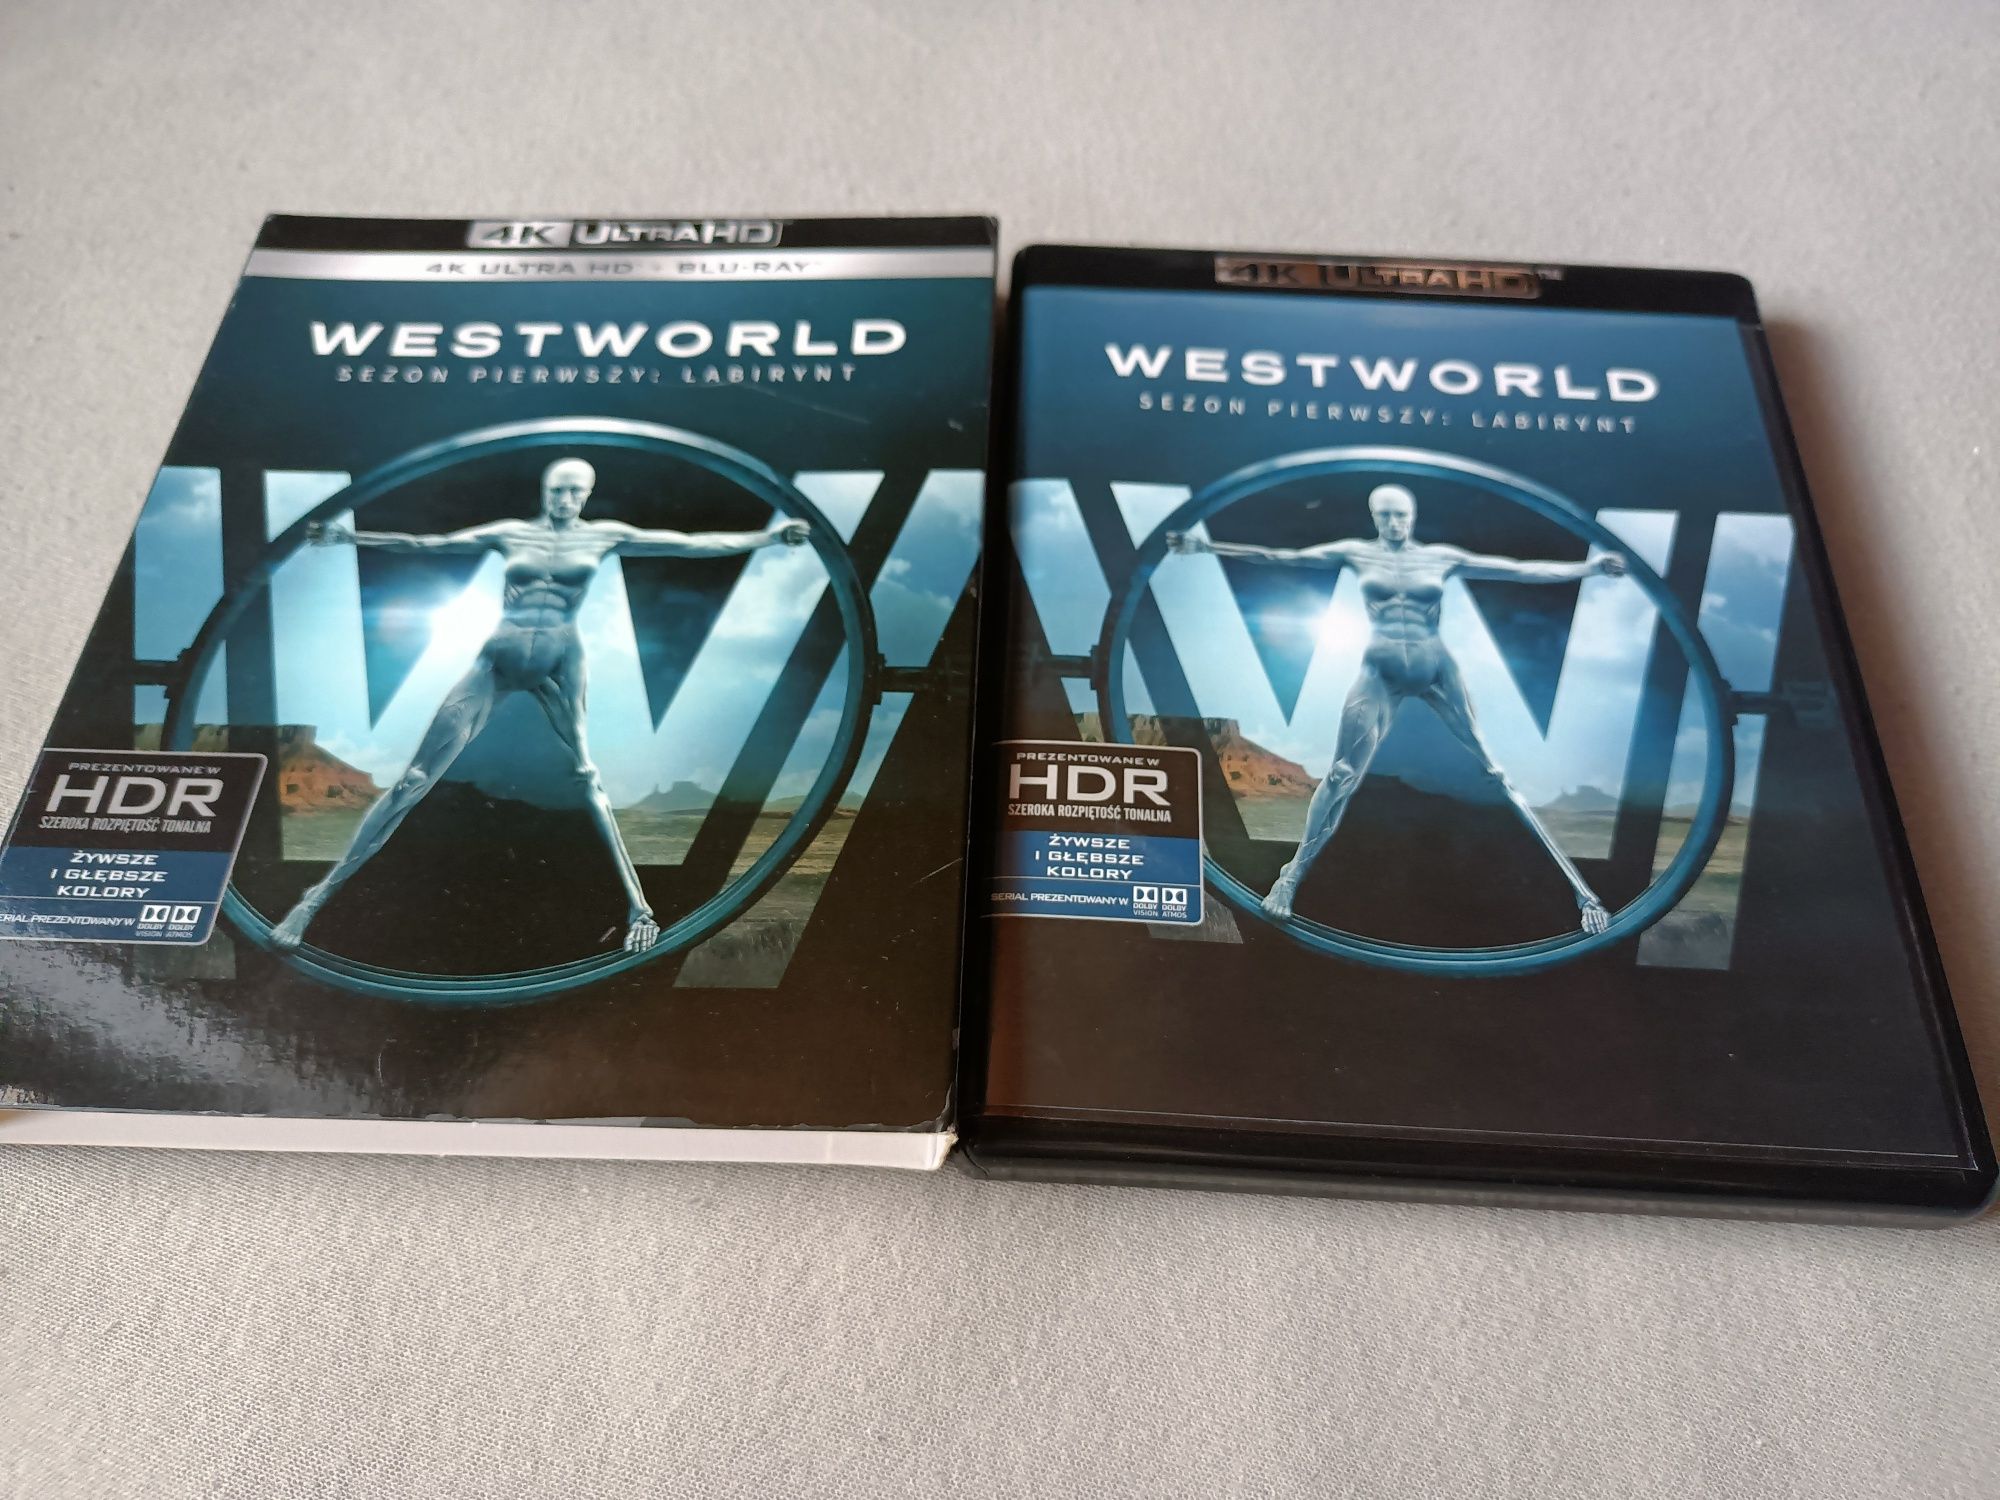 Westworld 4k sezon 1: Labirynt